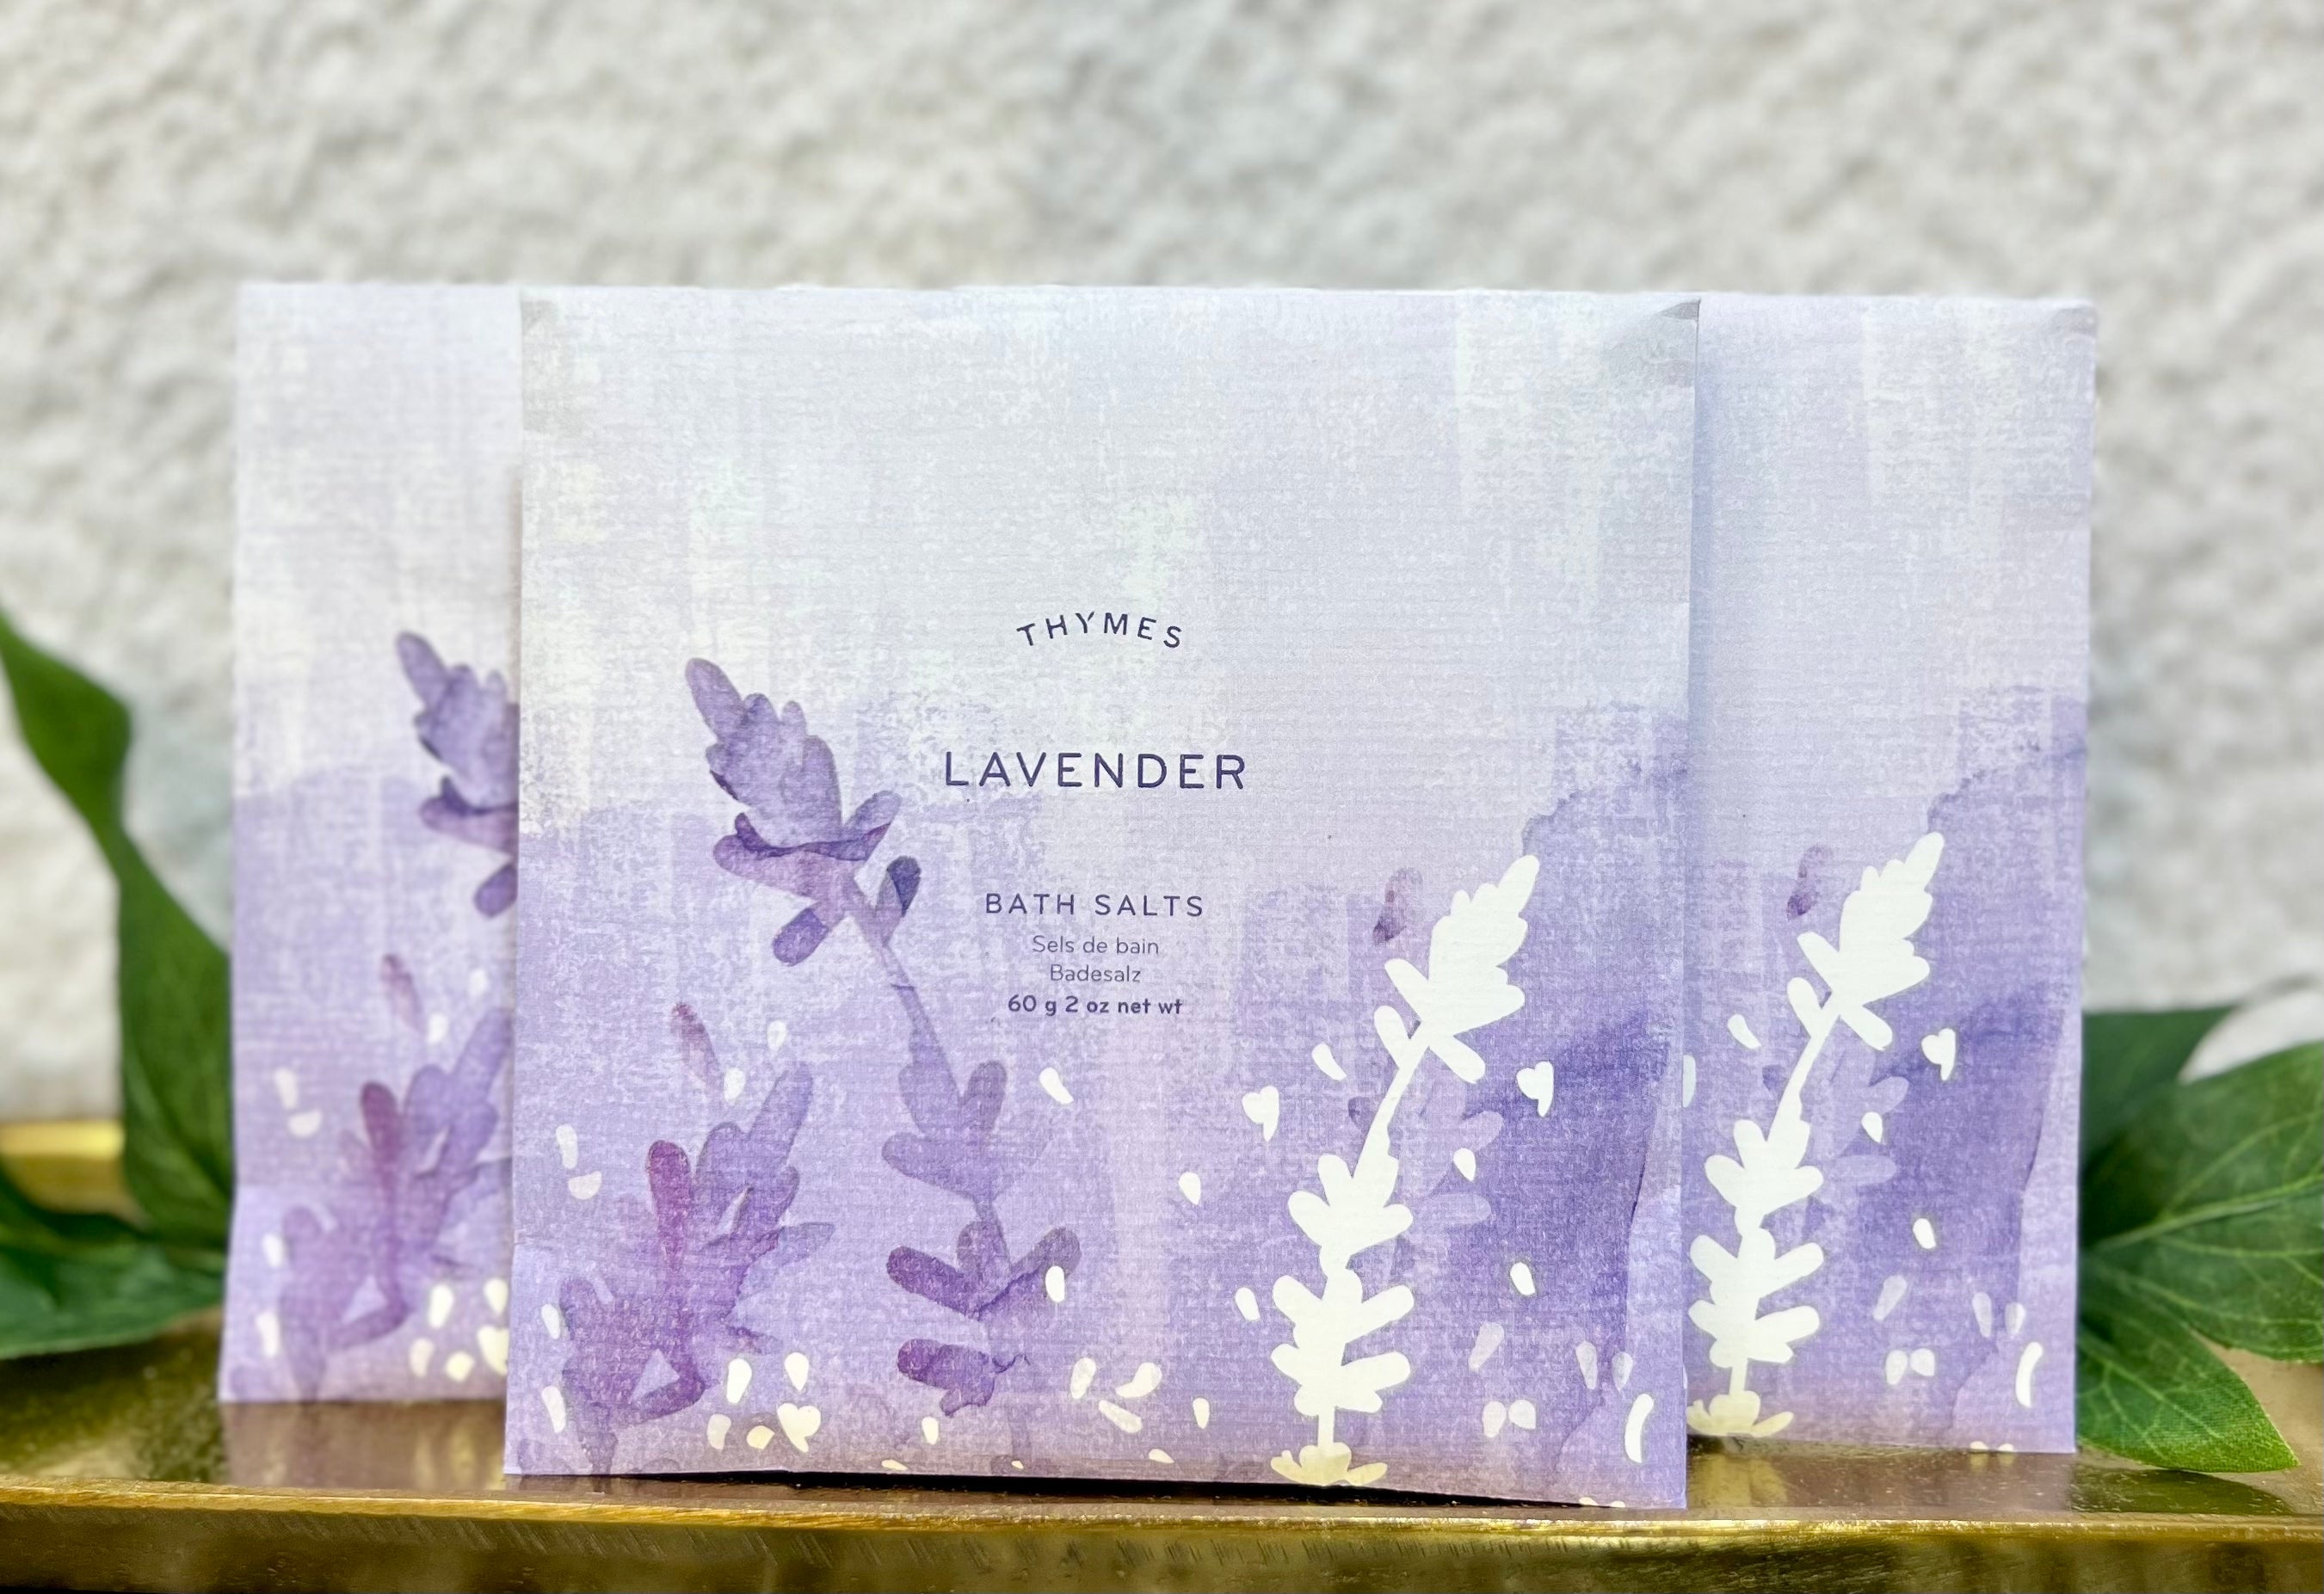 Thymes “Lavender” bath salts